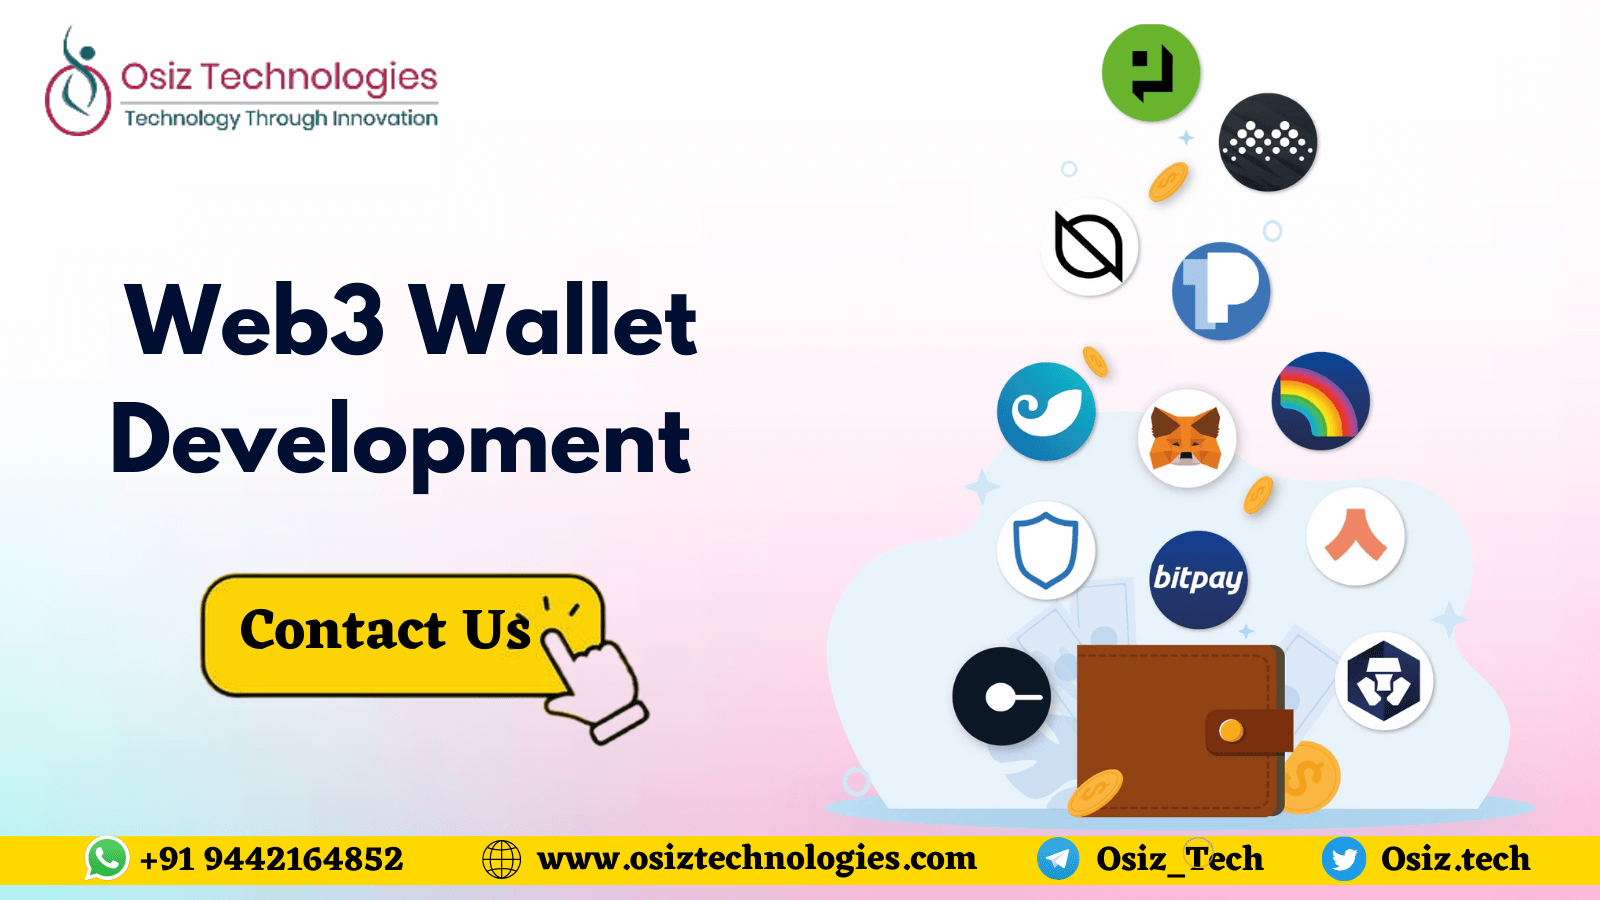 Web3 Wallet Development Company - Osiz